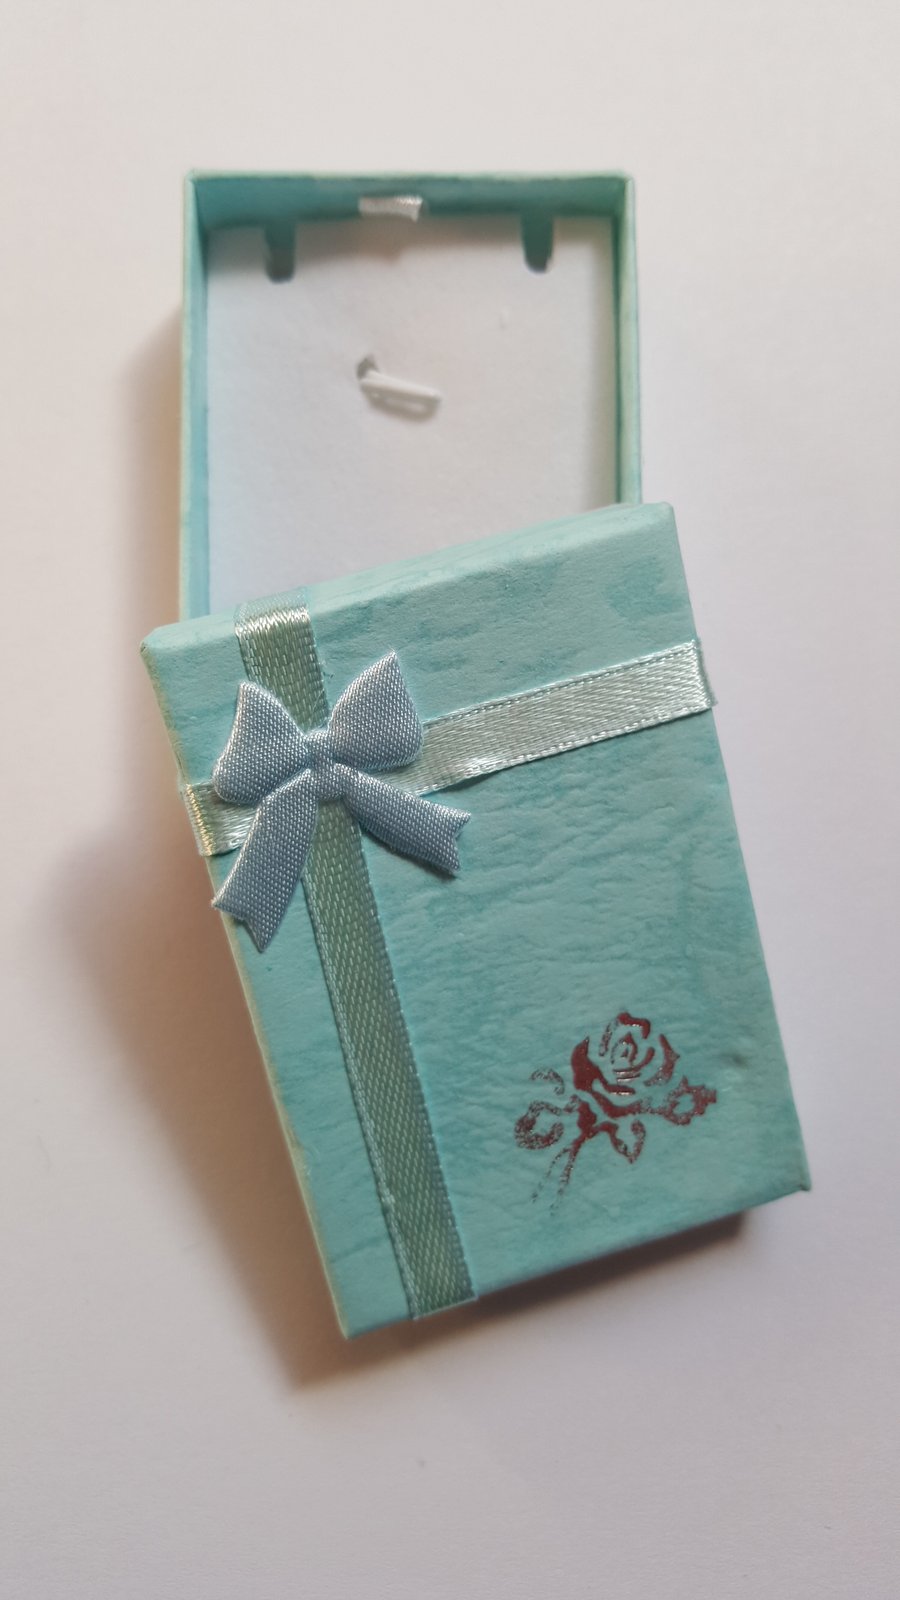 1 x Cardboard Jewellery Gift Box - 7cm - Bow & Rose Design - Blue 